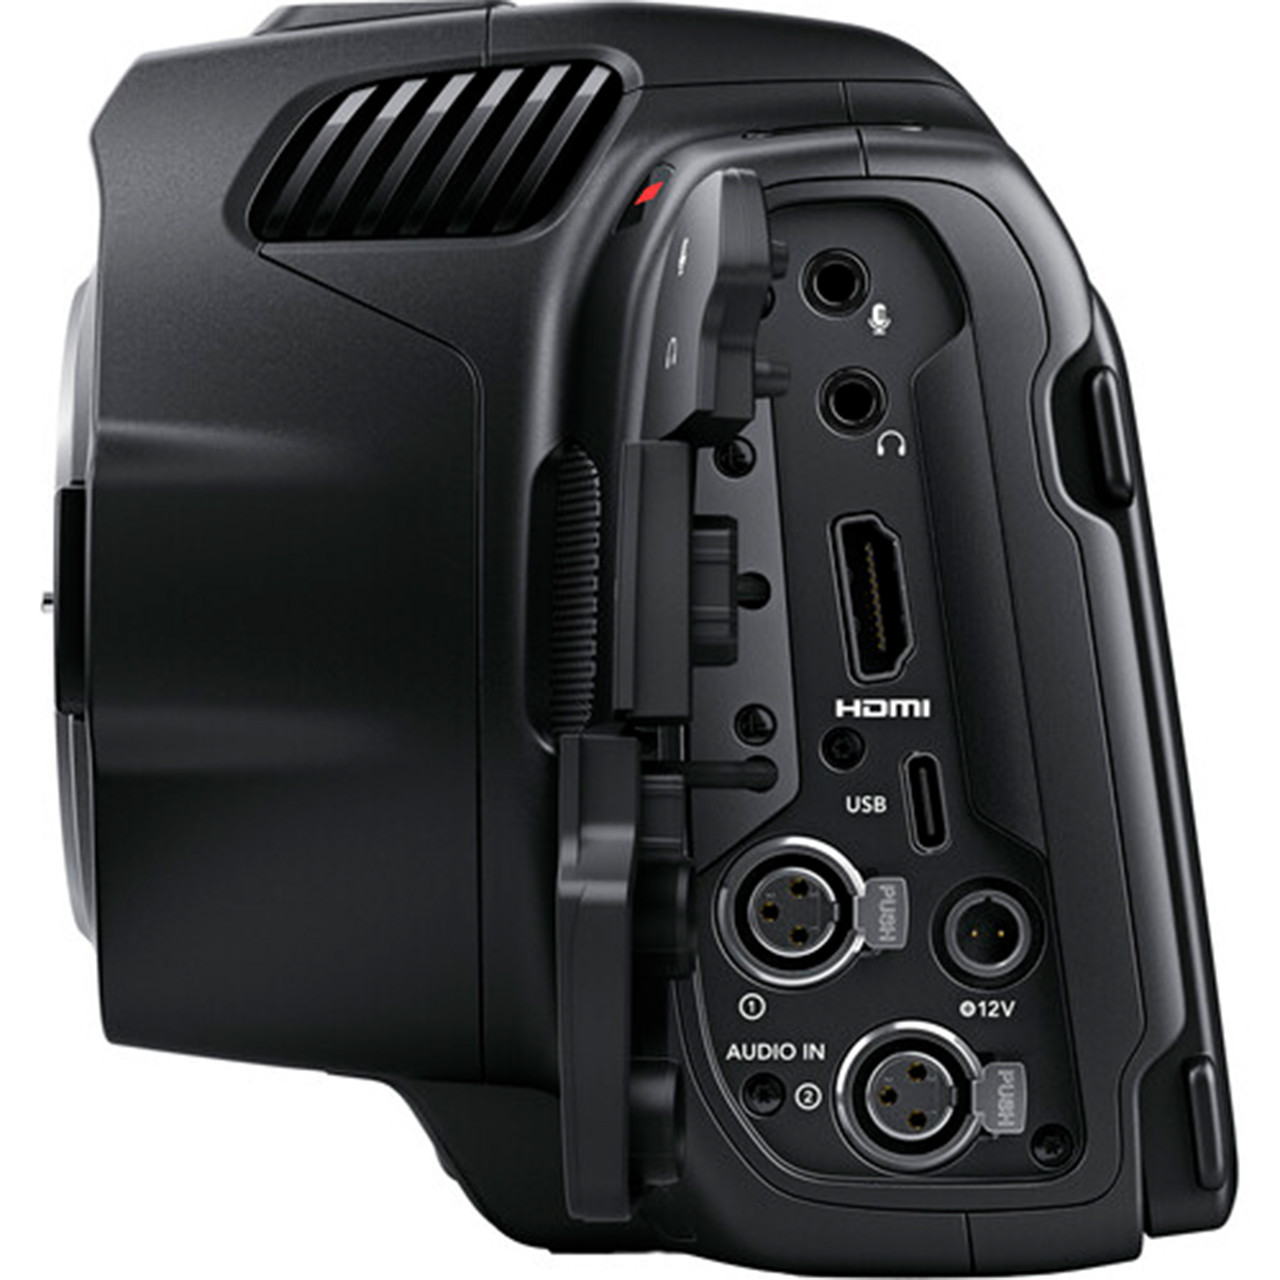 BLACKMAGIC Zoom Pocket Kompakt-Filmkamera Camera G2 6K Cinema opt.